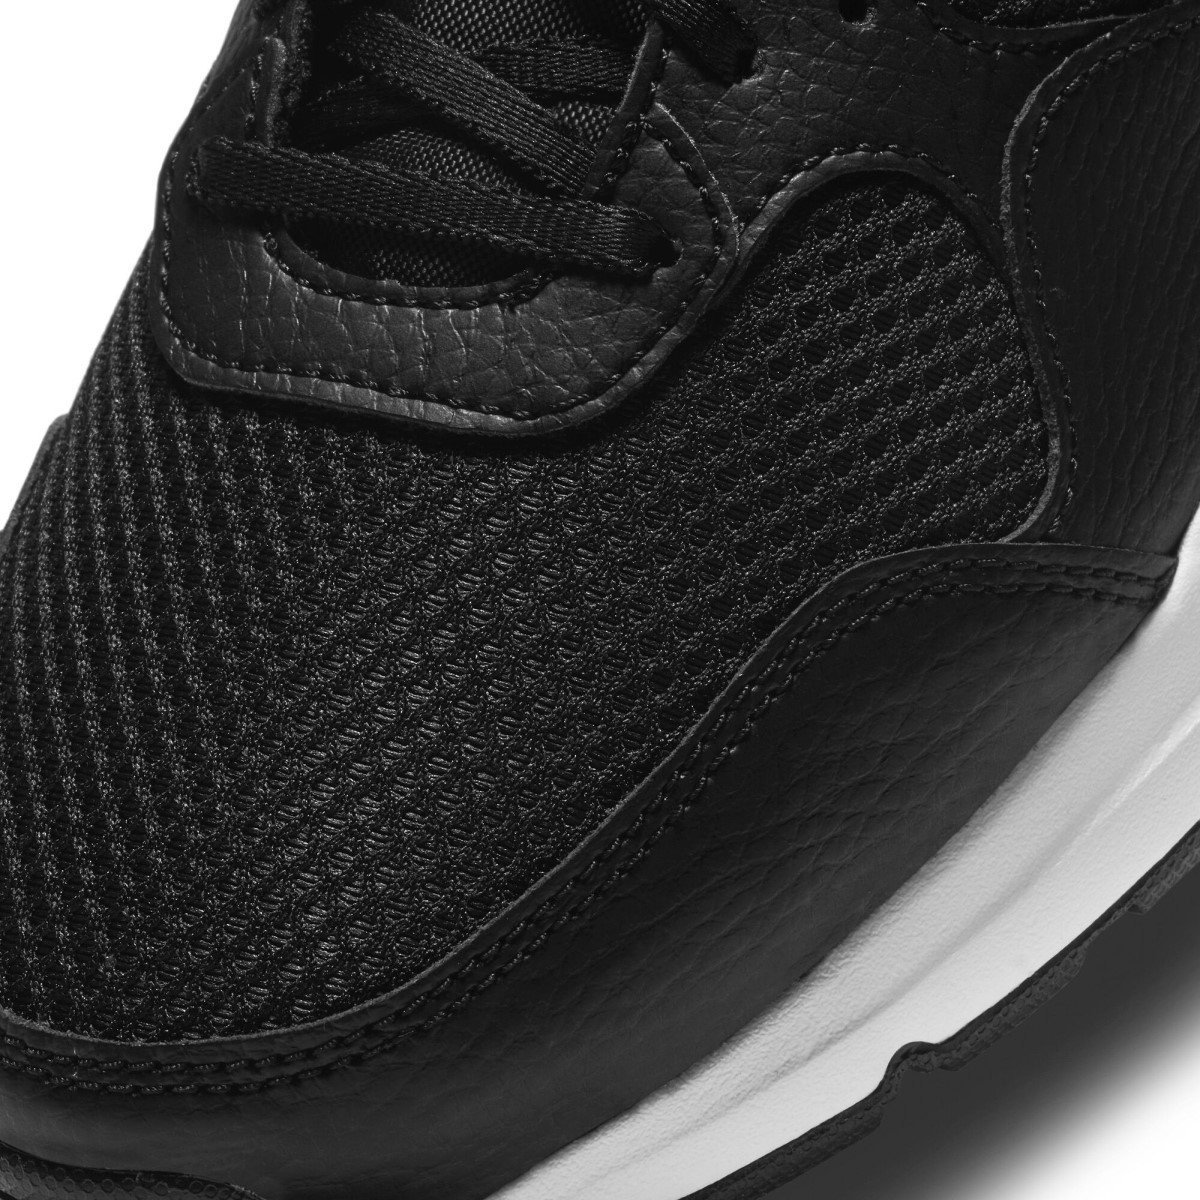 Obuv Nike Air Max SC W - čierna/biela